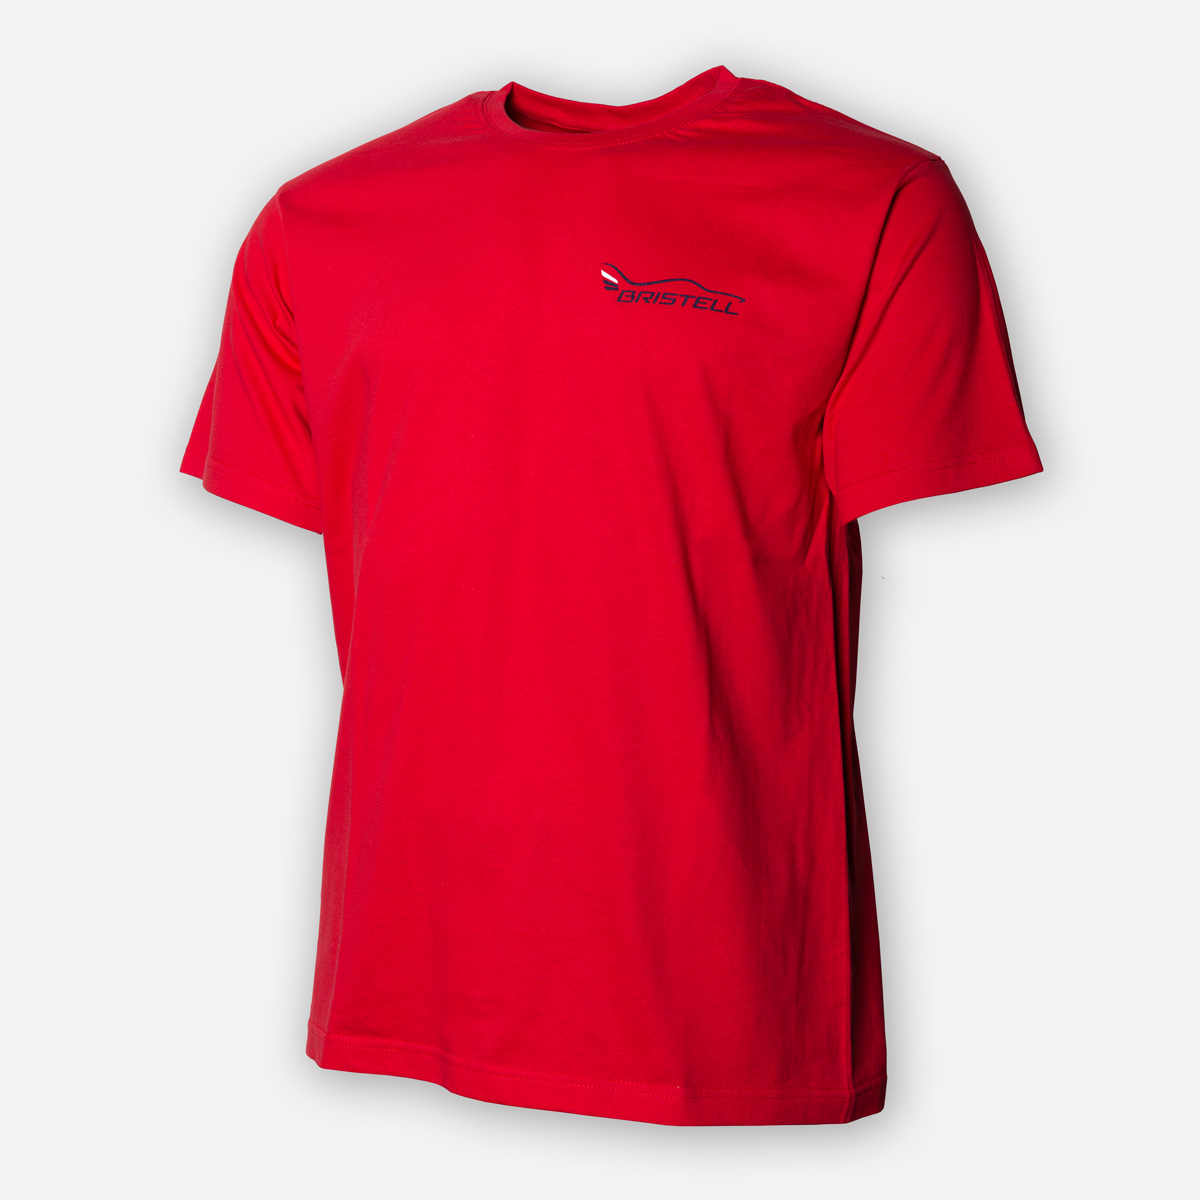 BRISTELL T-shirt Red